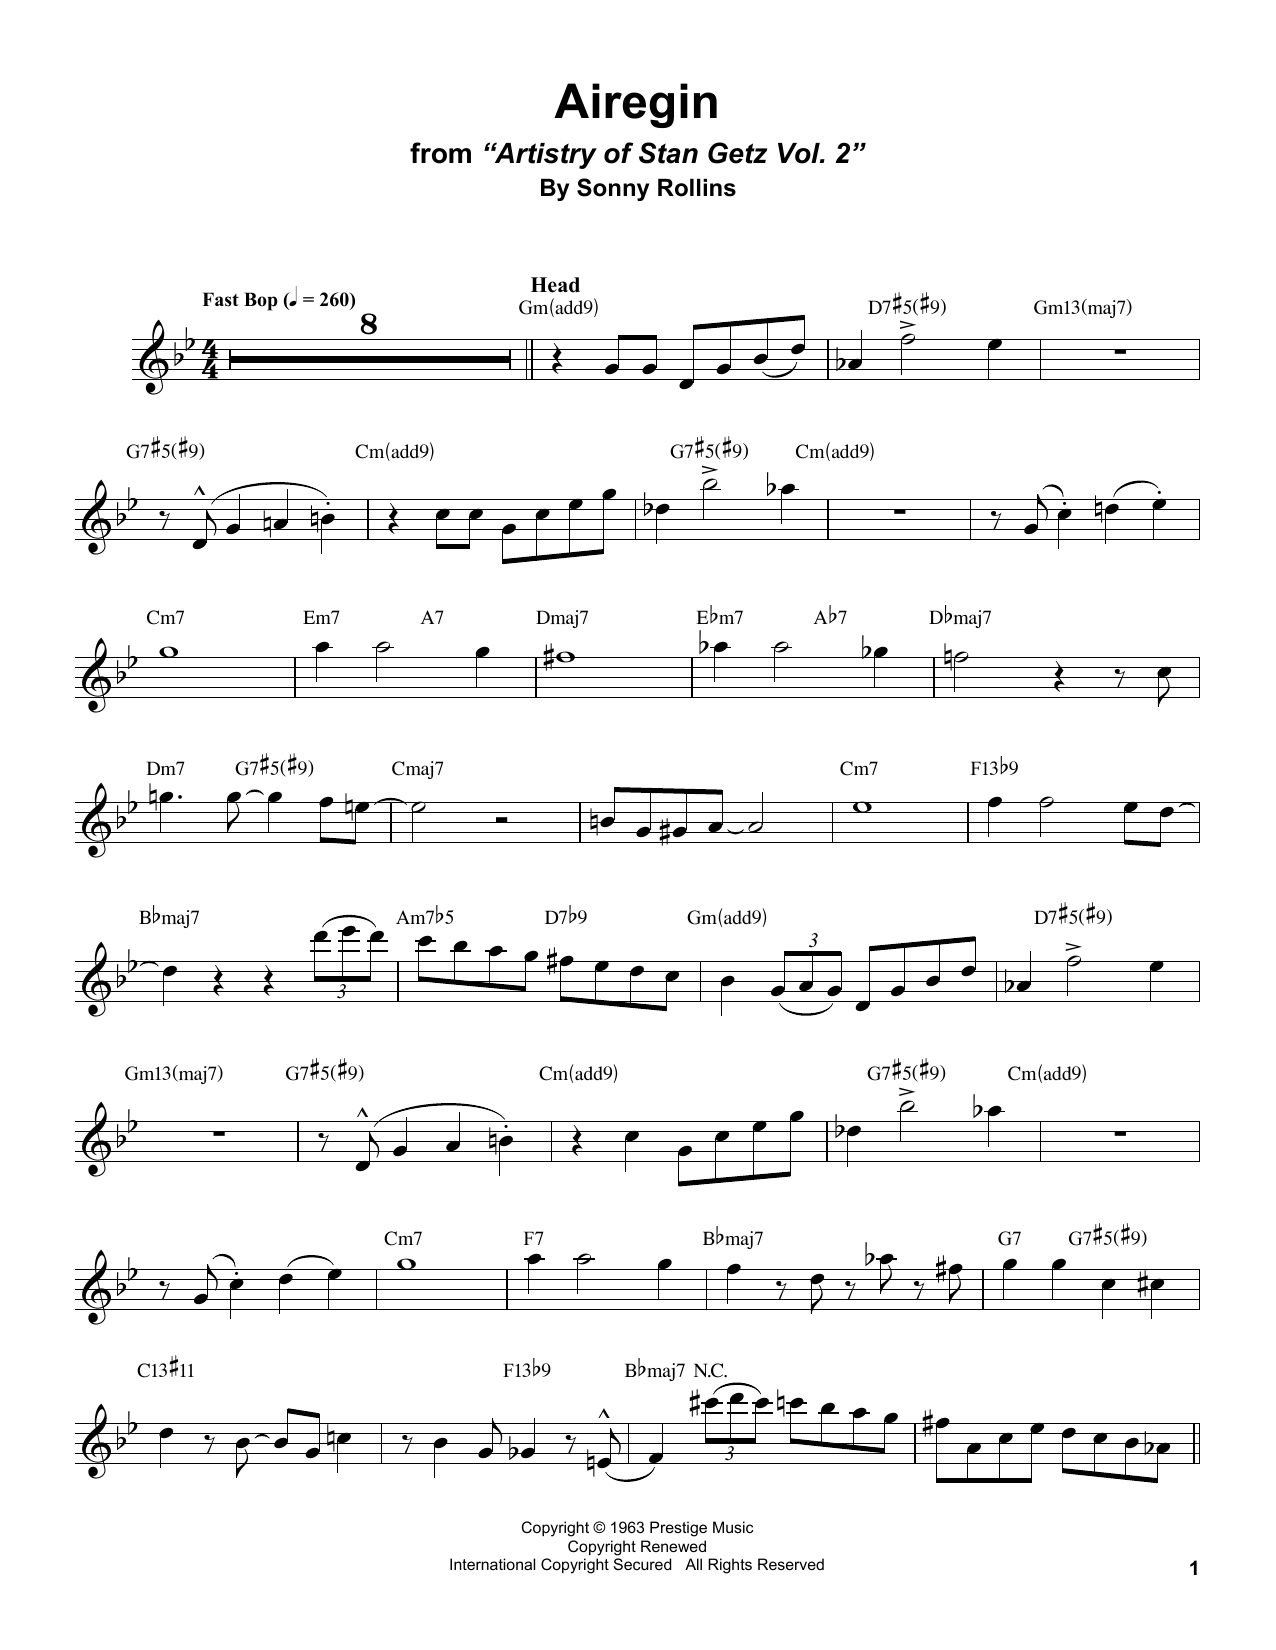 Stan Getz Airegin Sheet Music Notes & Chords for Alto Sax Transcription - Download or Print PDF